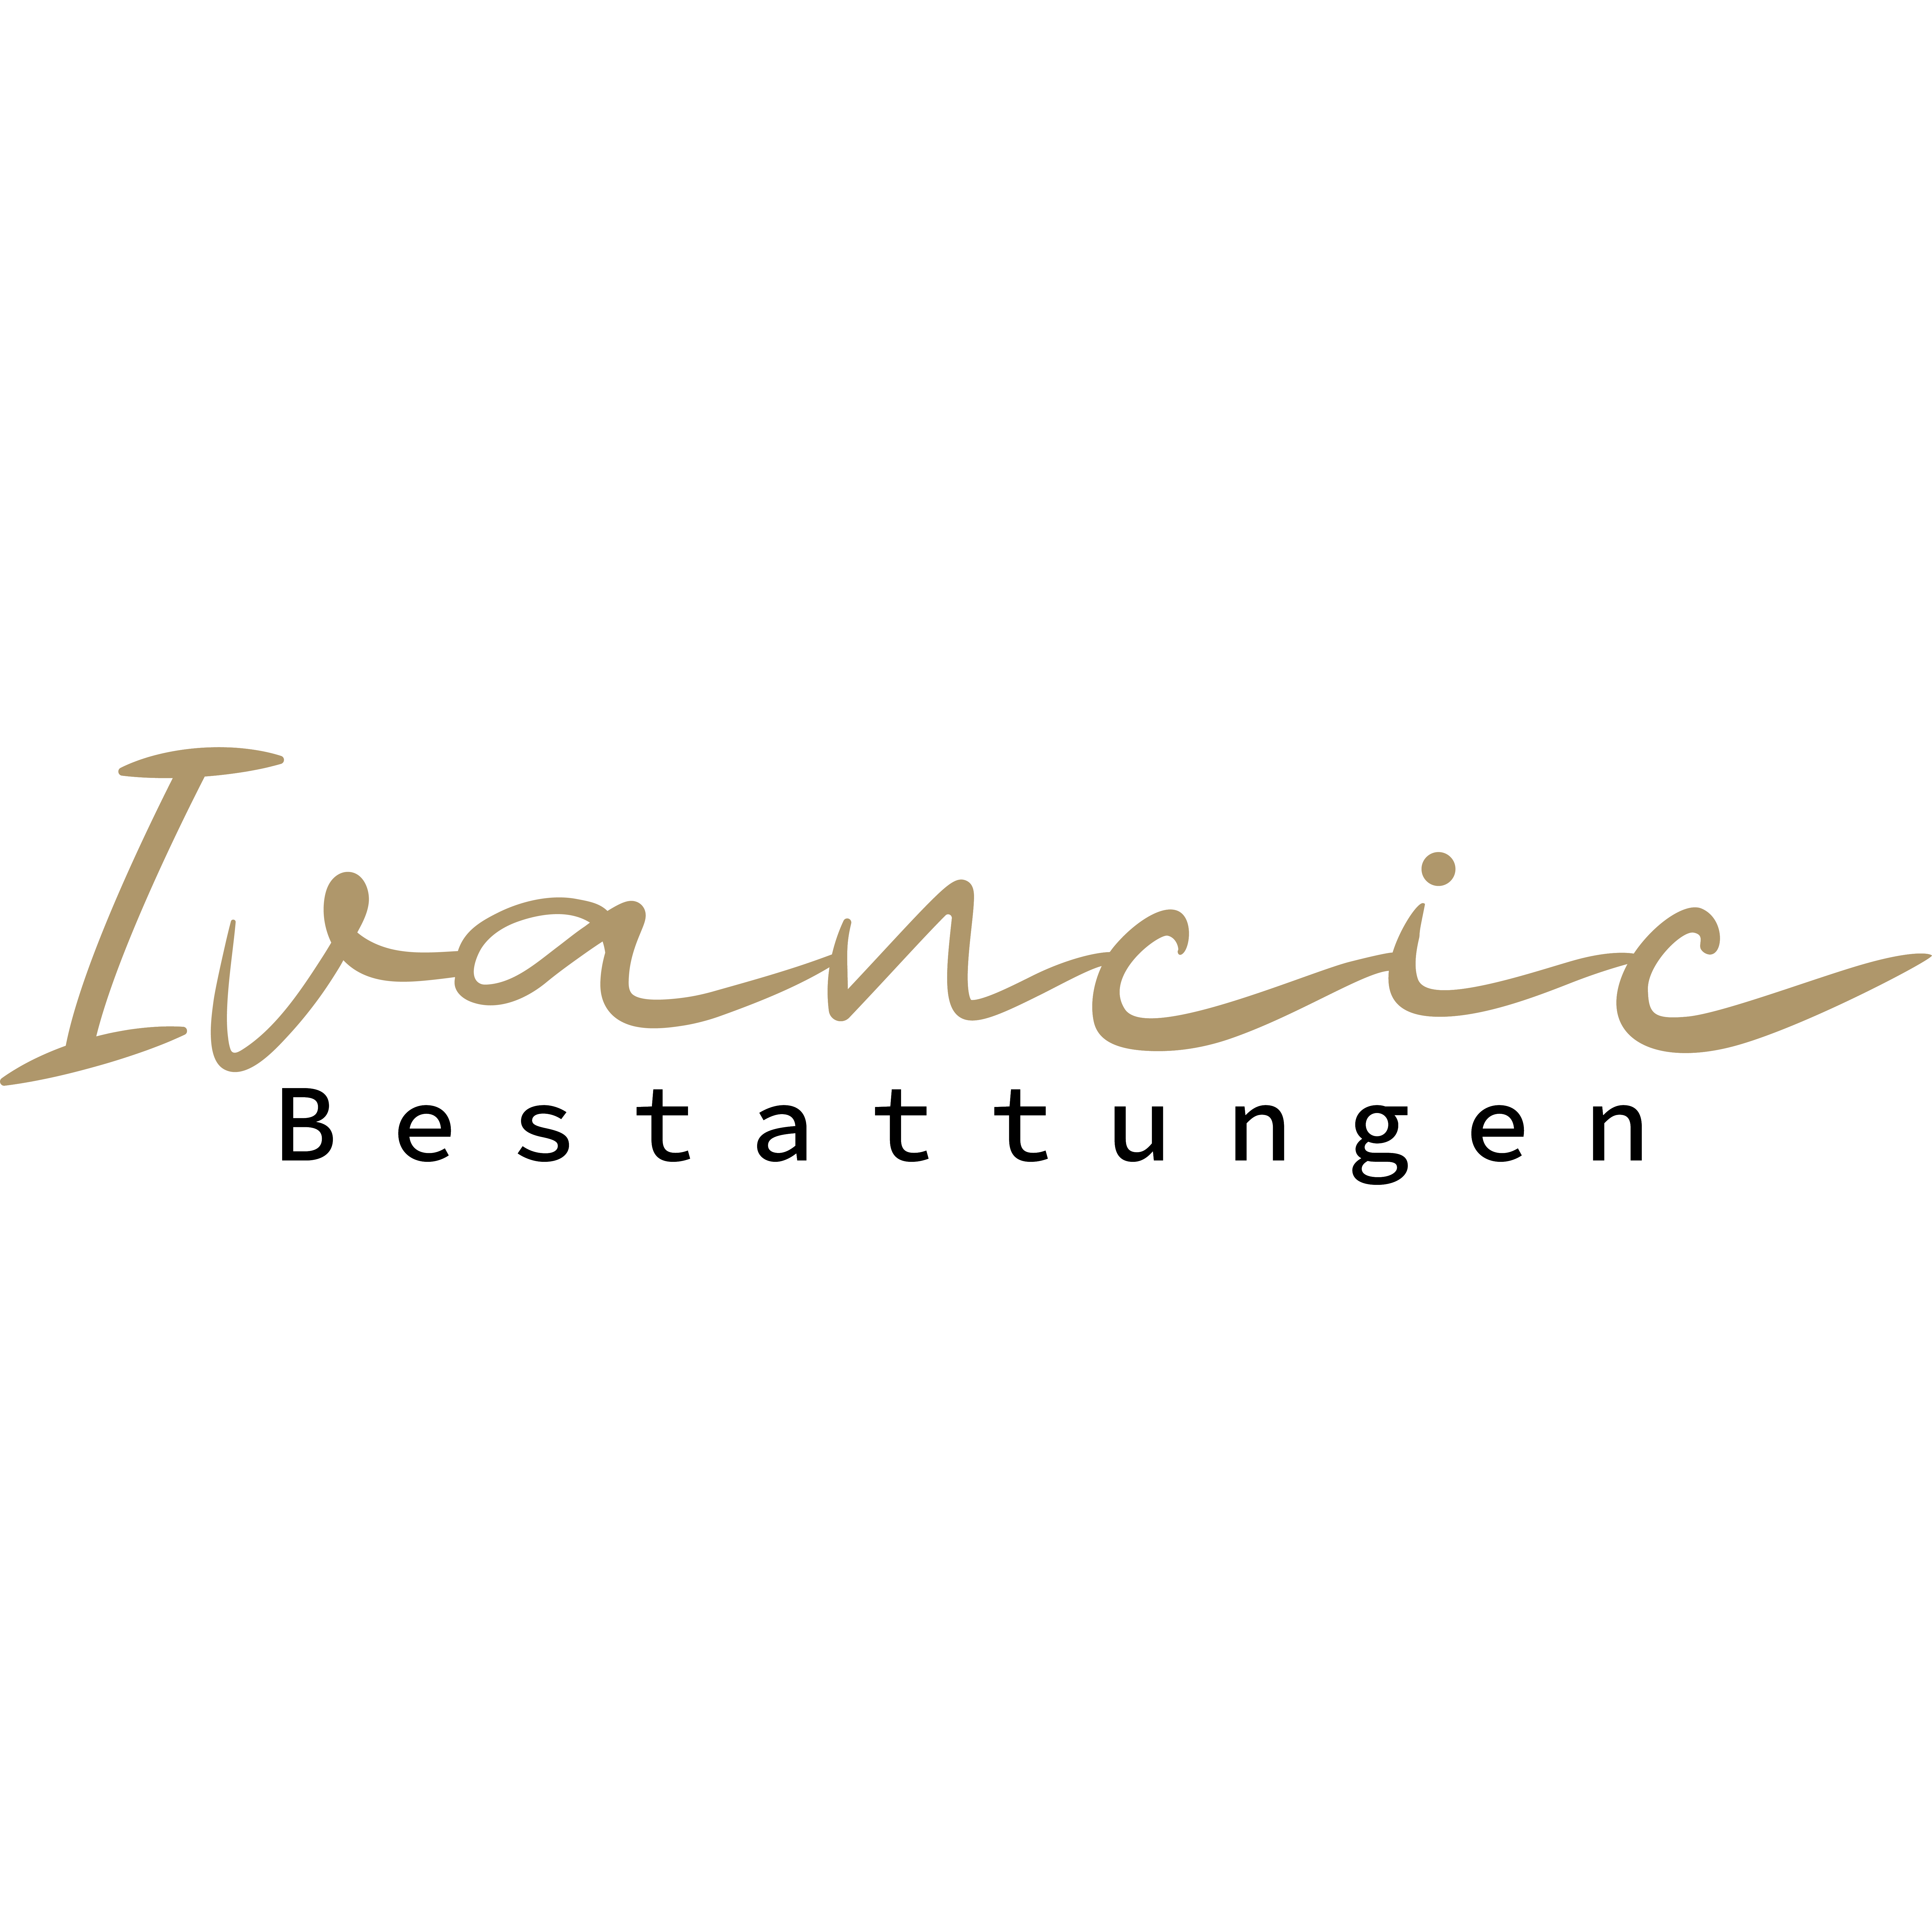 Ivancic Bestattungen GmbH in Ludwigsburg in Württemberg - Logo